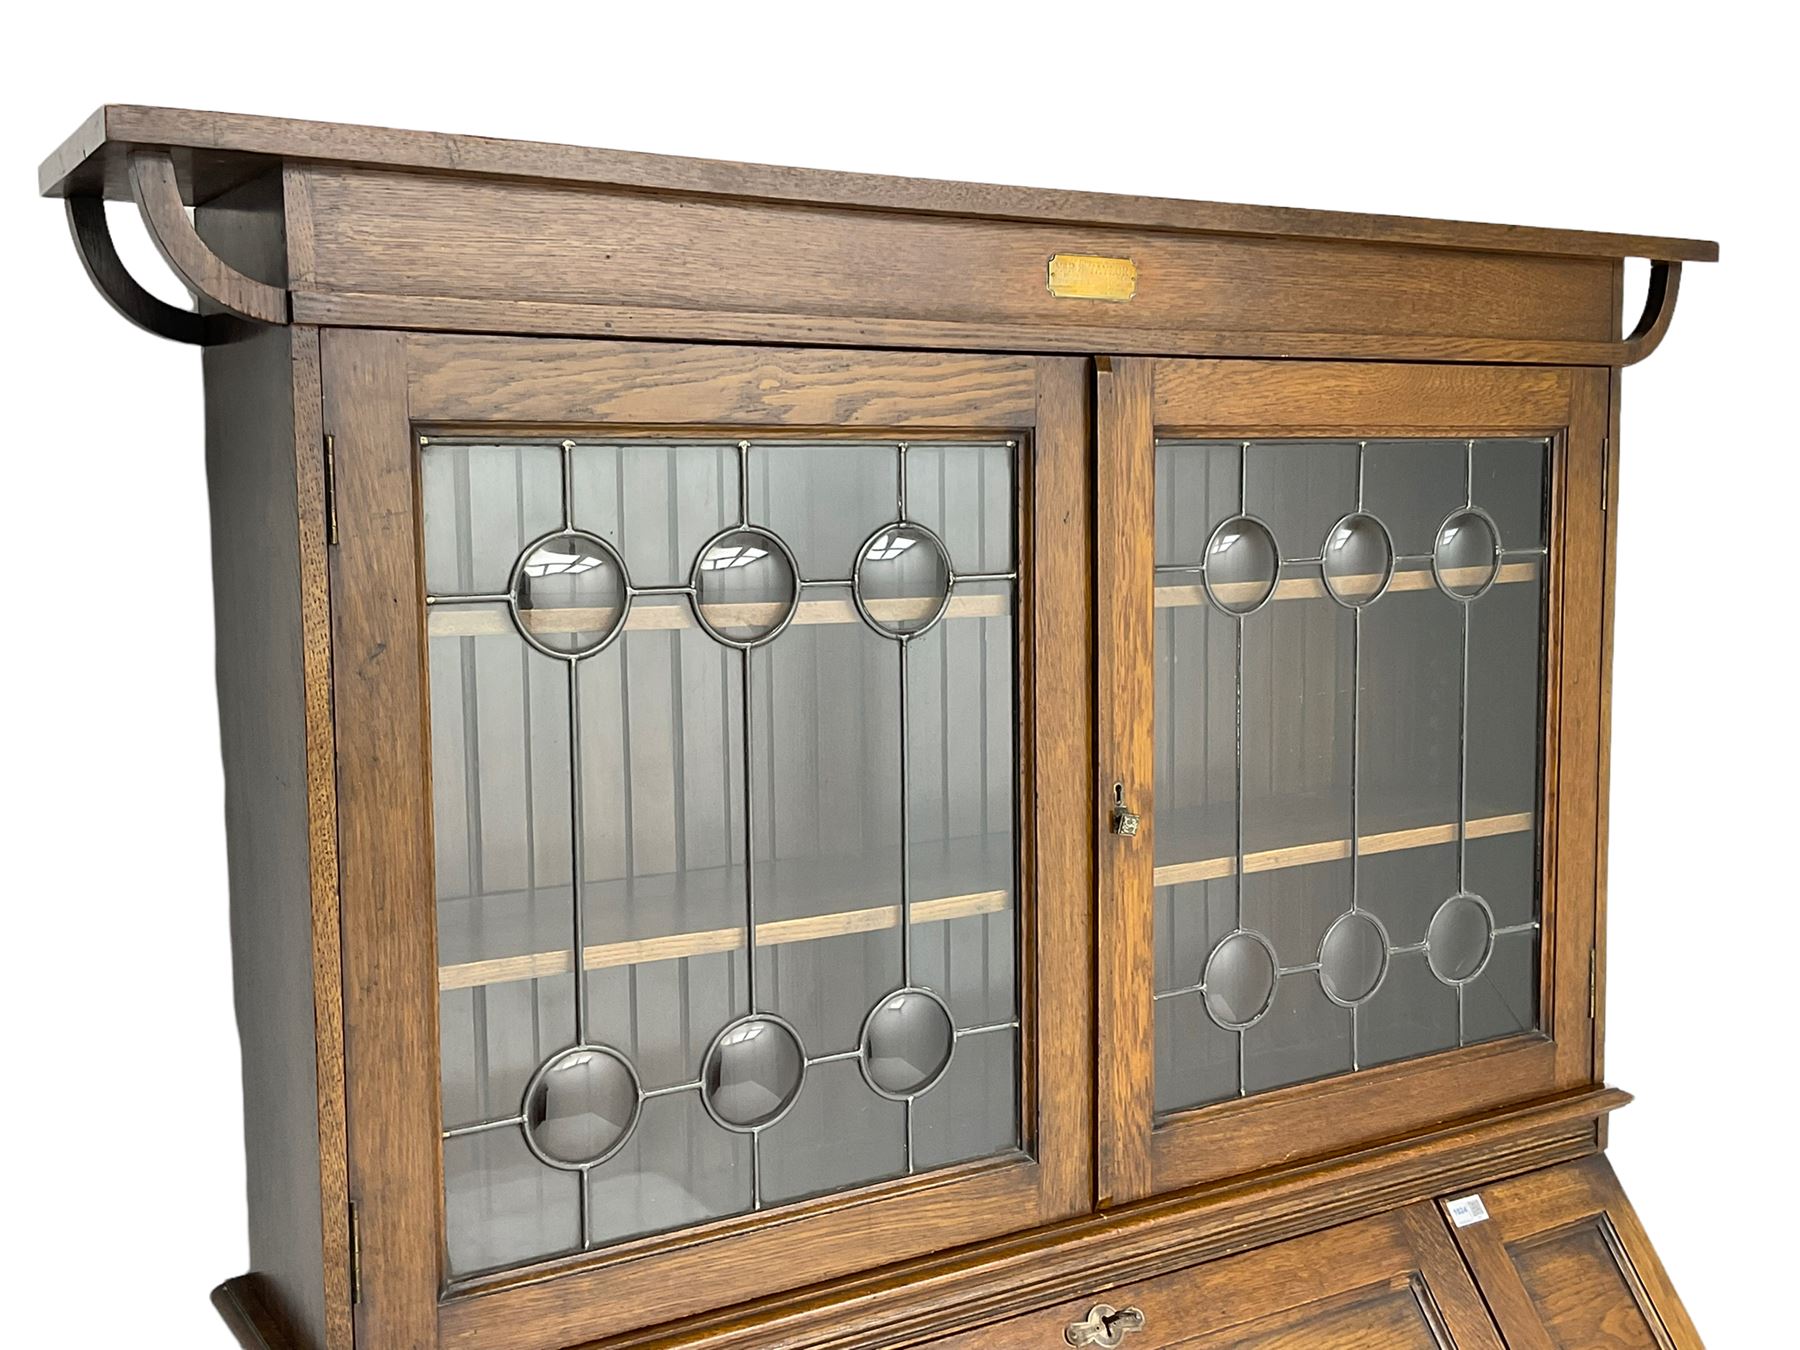 The Britisher Desk - early 20th century oak bureau cabinet - Image 4 of 4